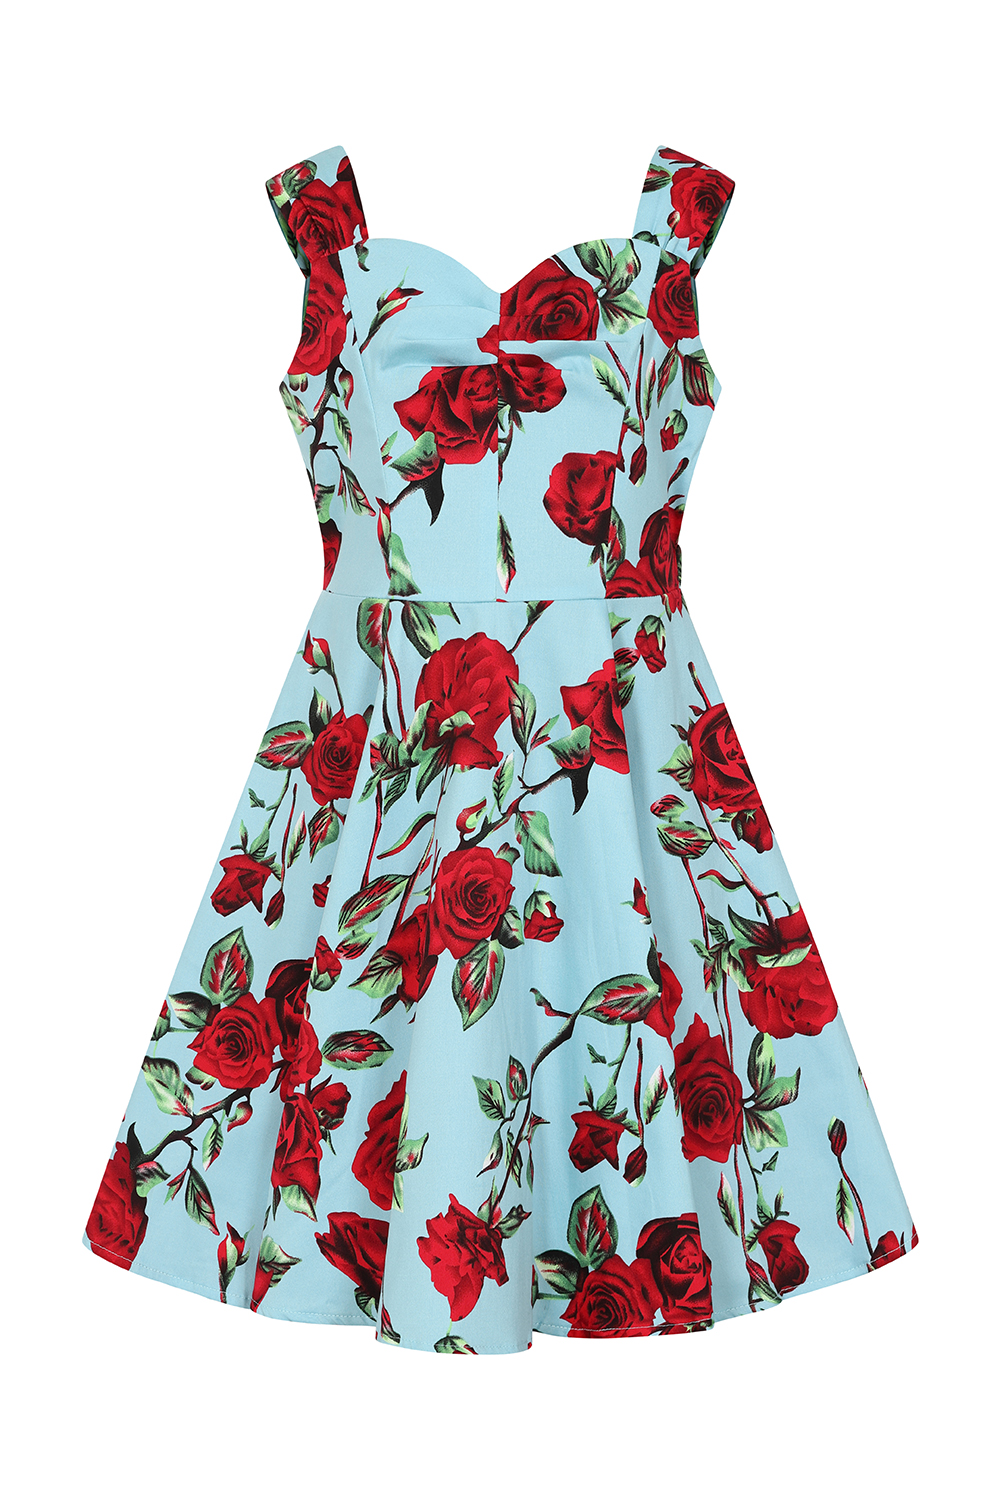 50s Ditsy Rose Floral Summer Dress in blue